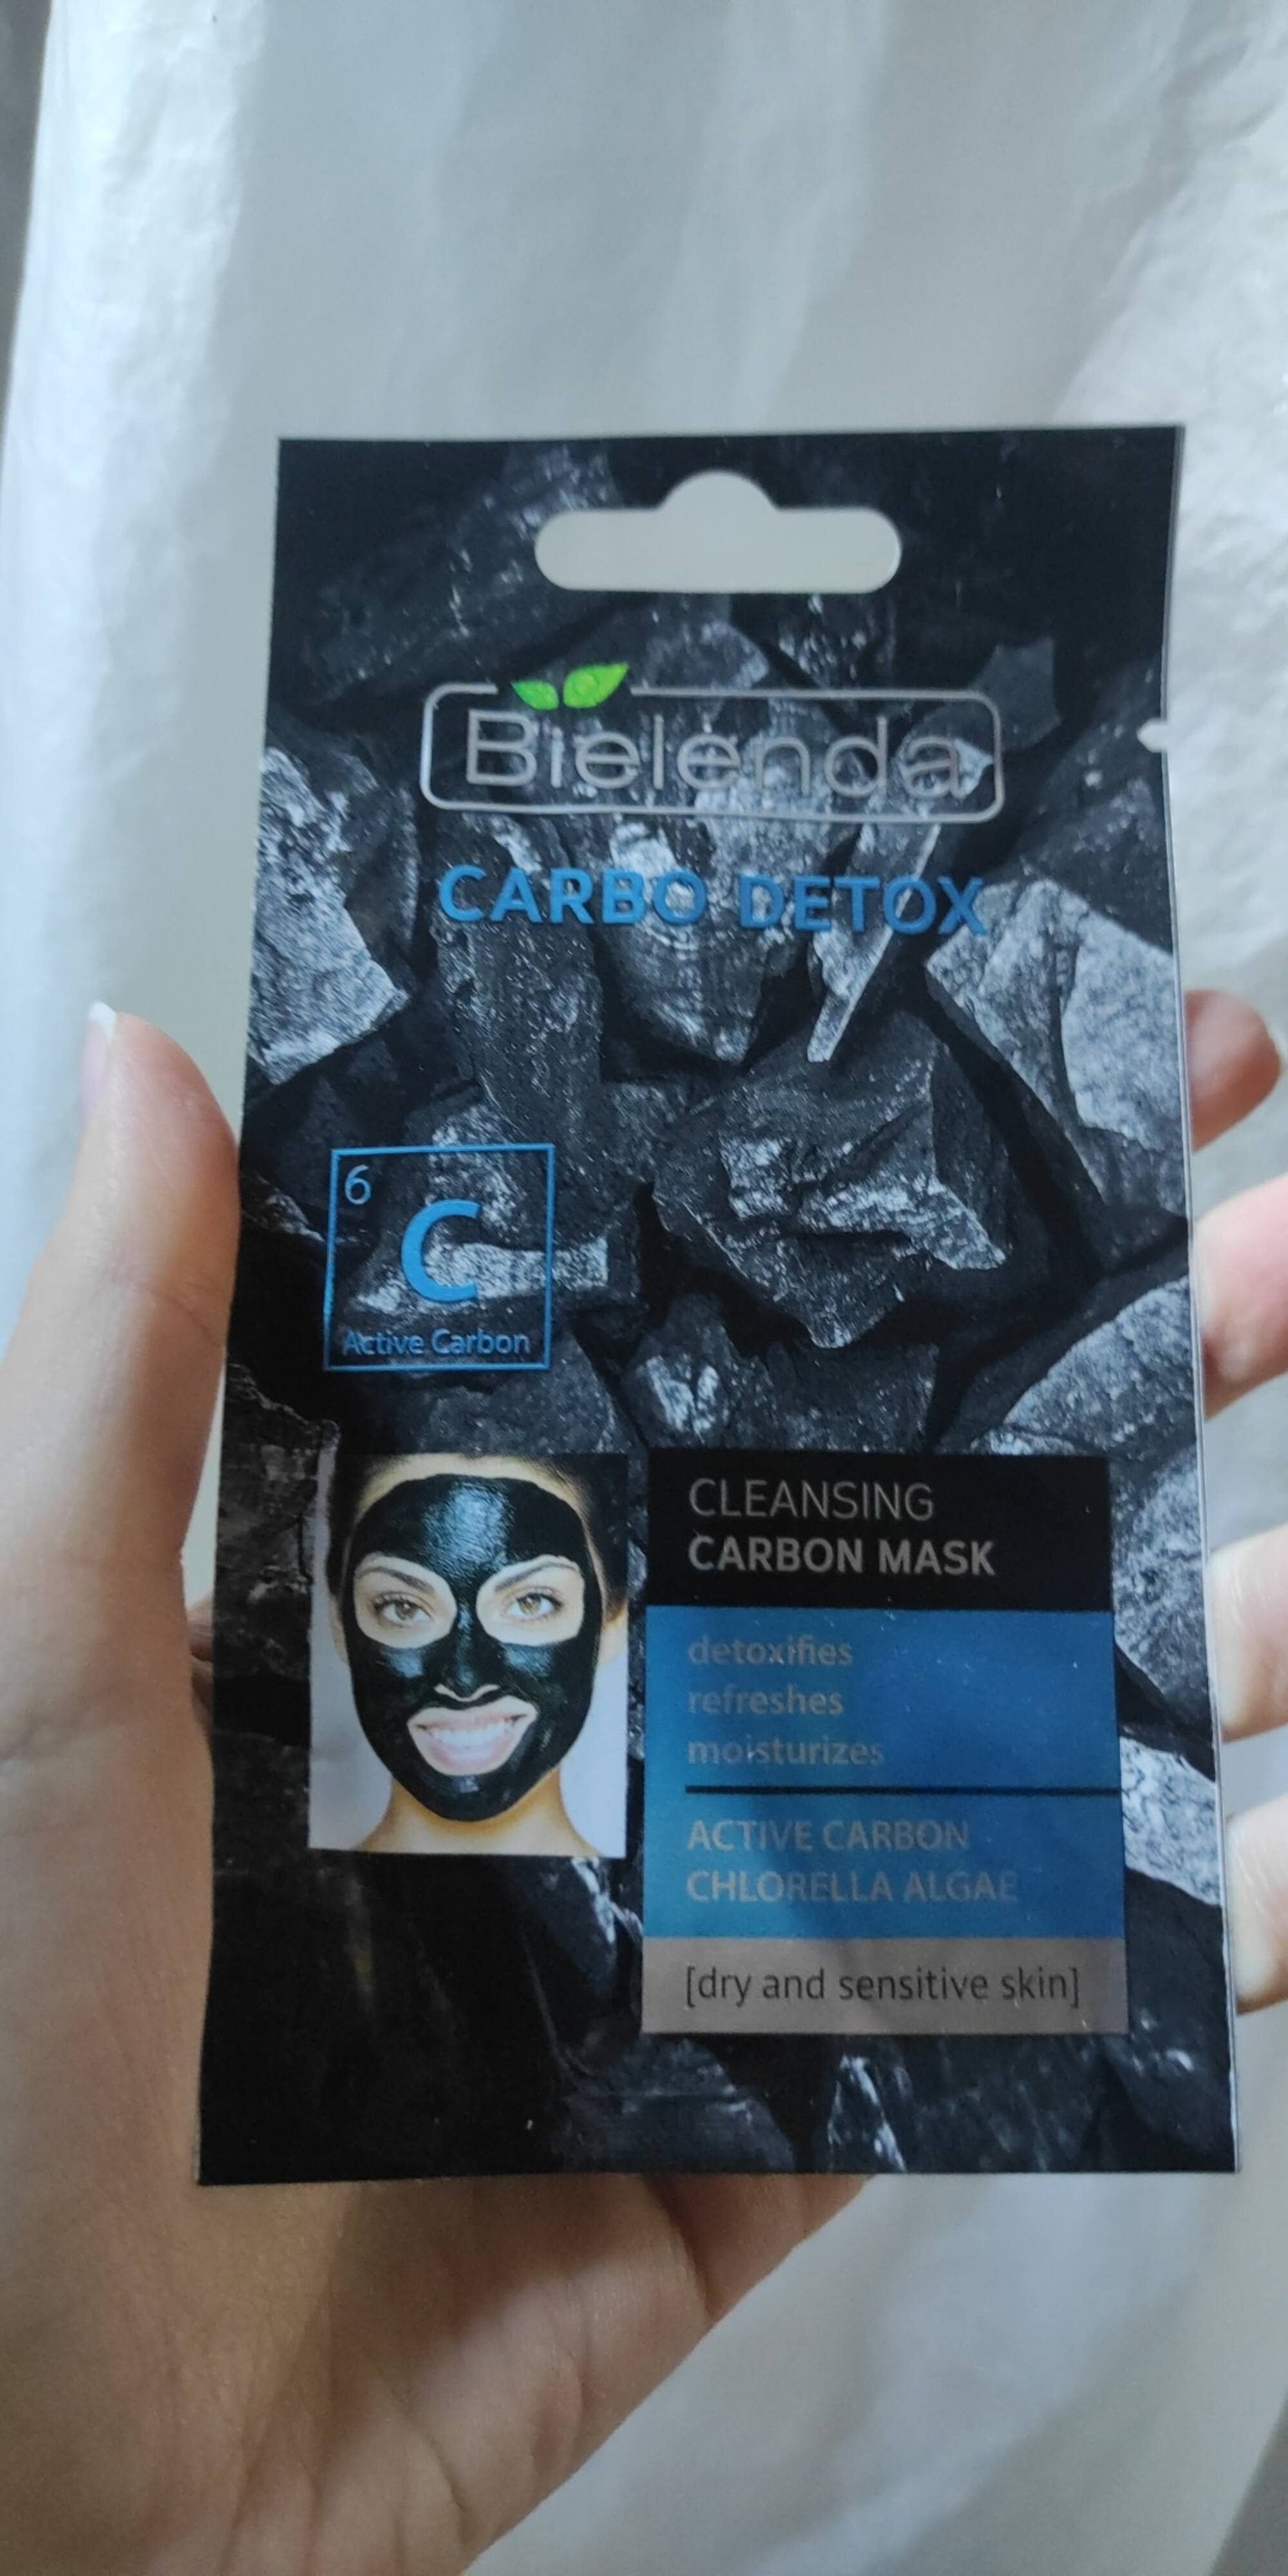 BIELENDA - Carbo detox - Cleansing carbon mask